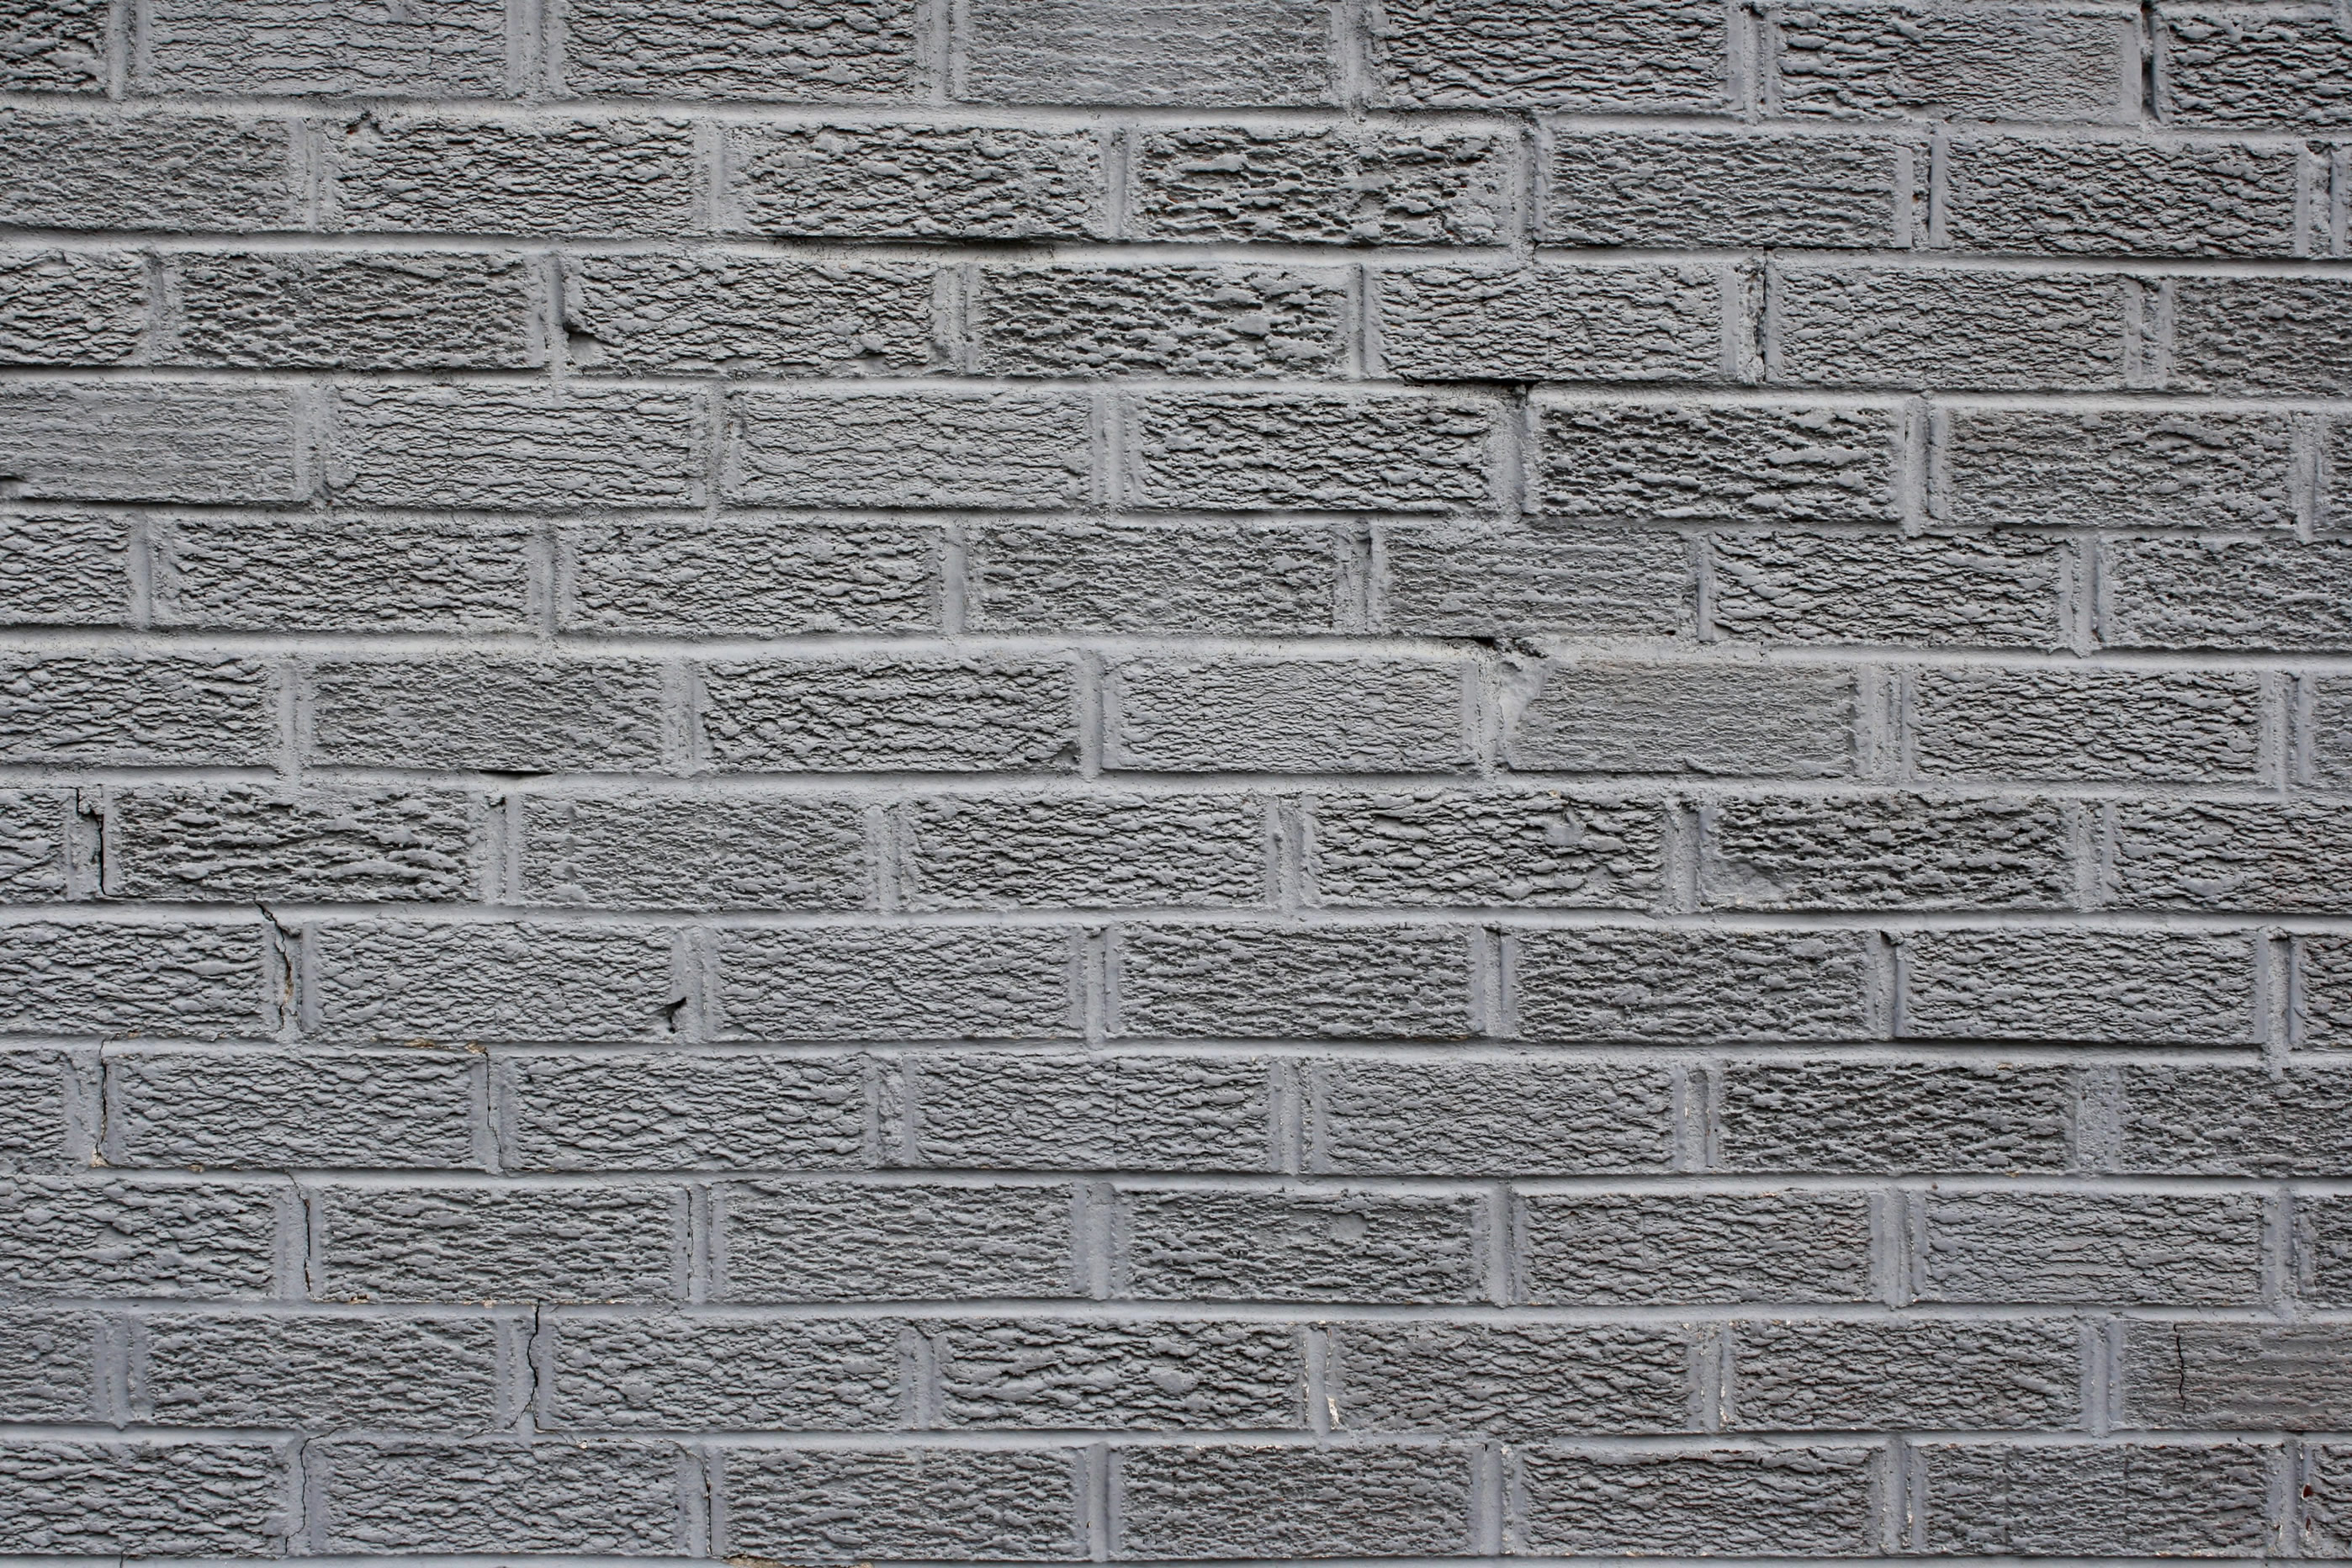  brick wall, texture, bricks, brick wall texture, background, download